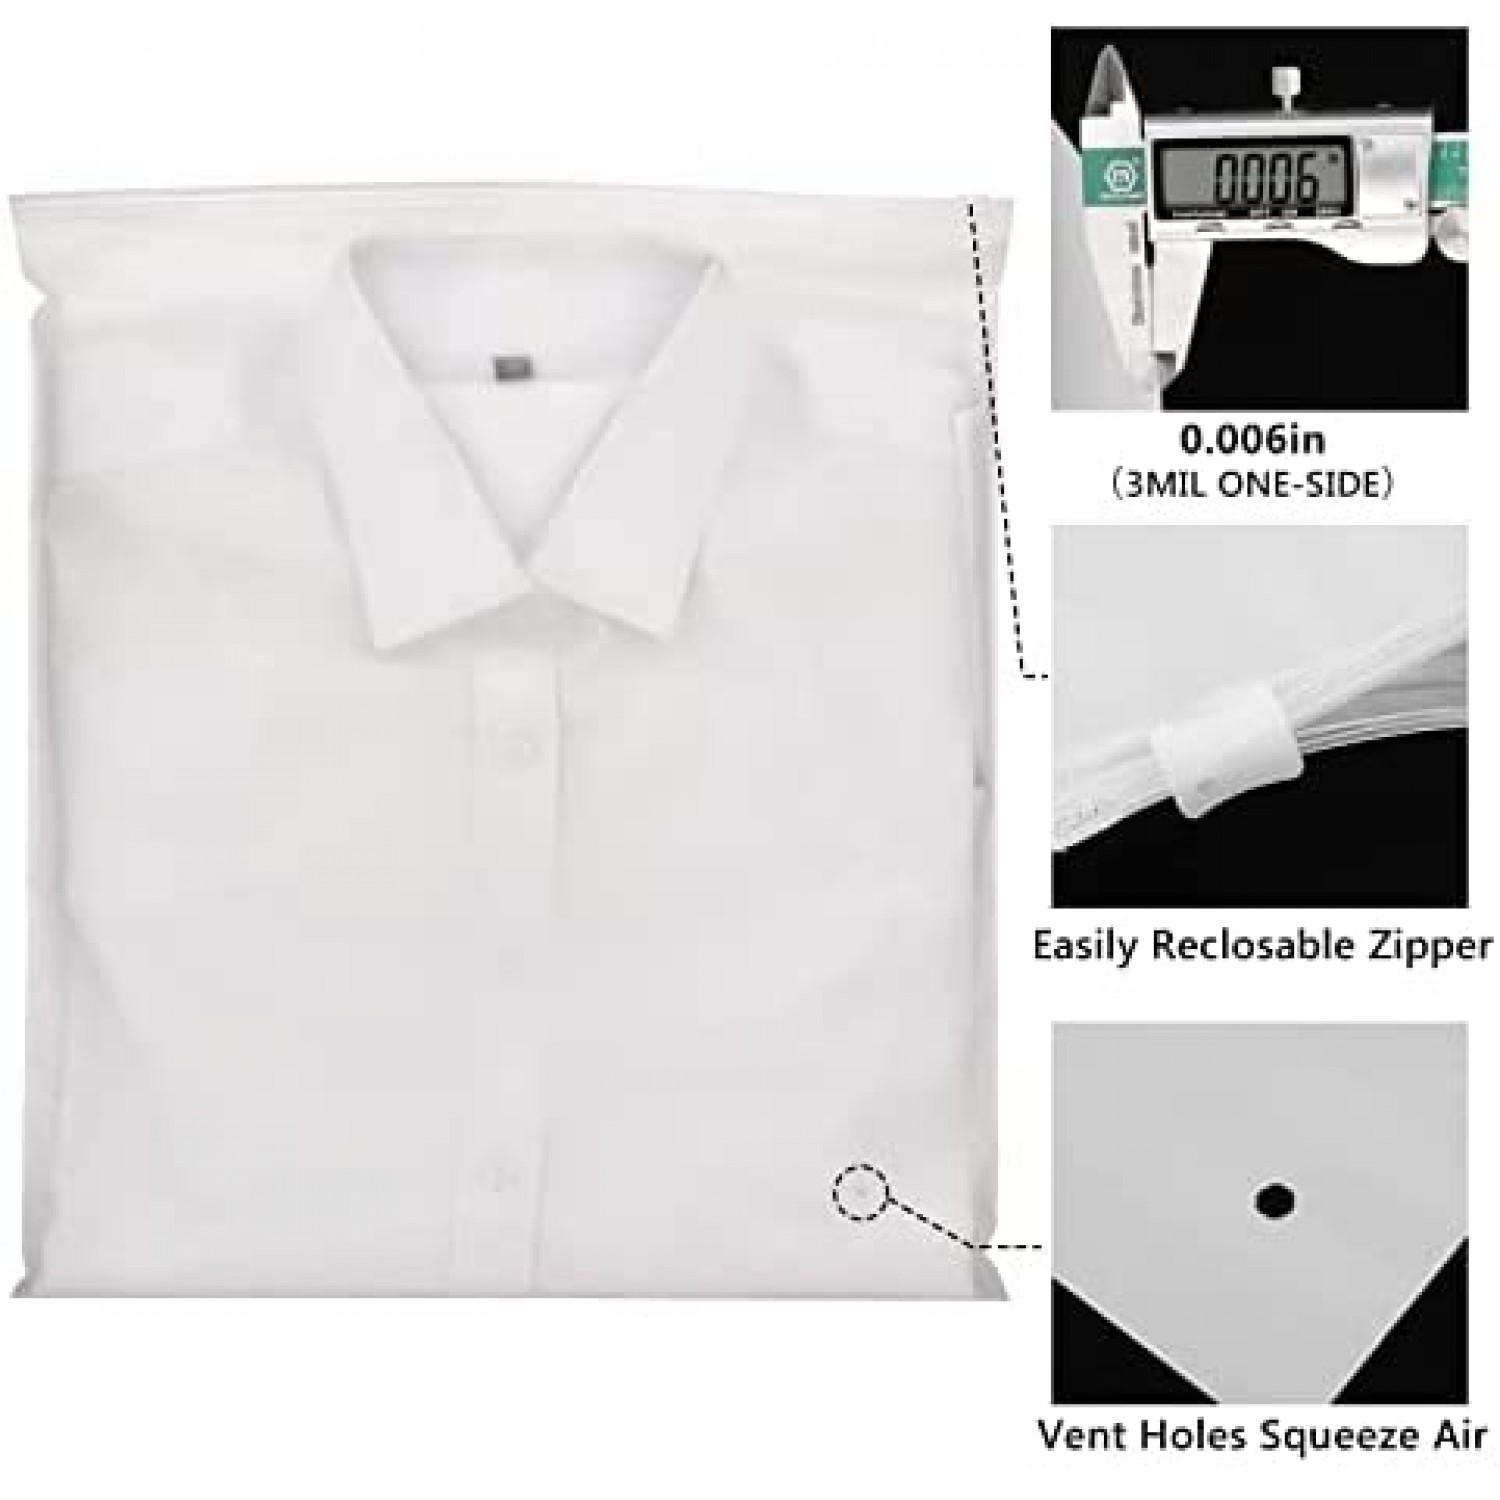 Zipper-Top Poly Bag, Size 3 in. × 5 in.